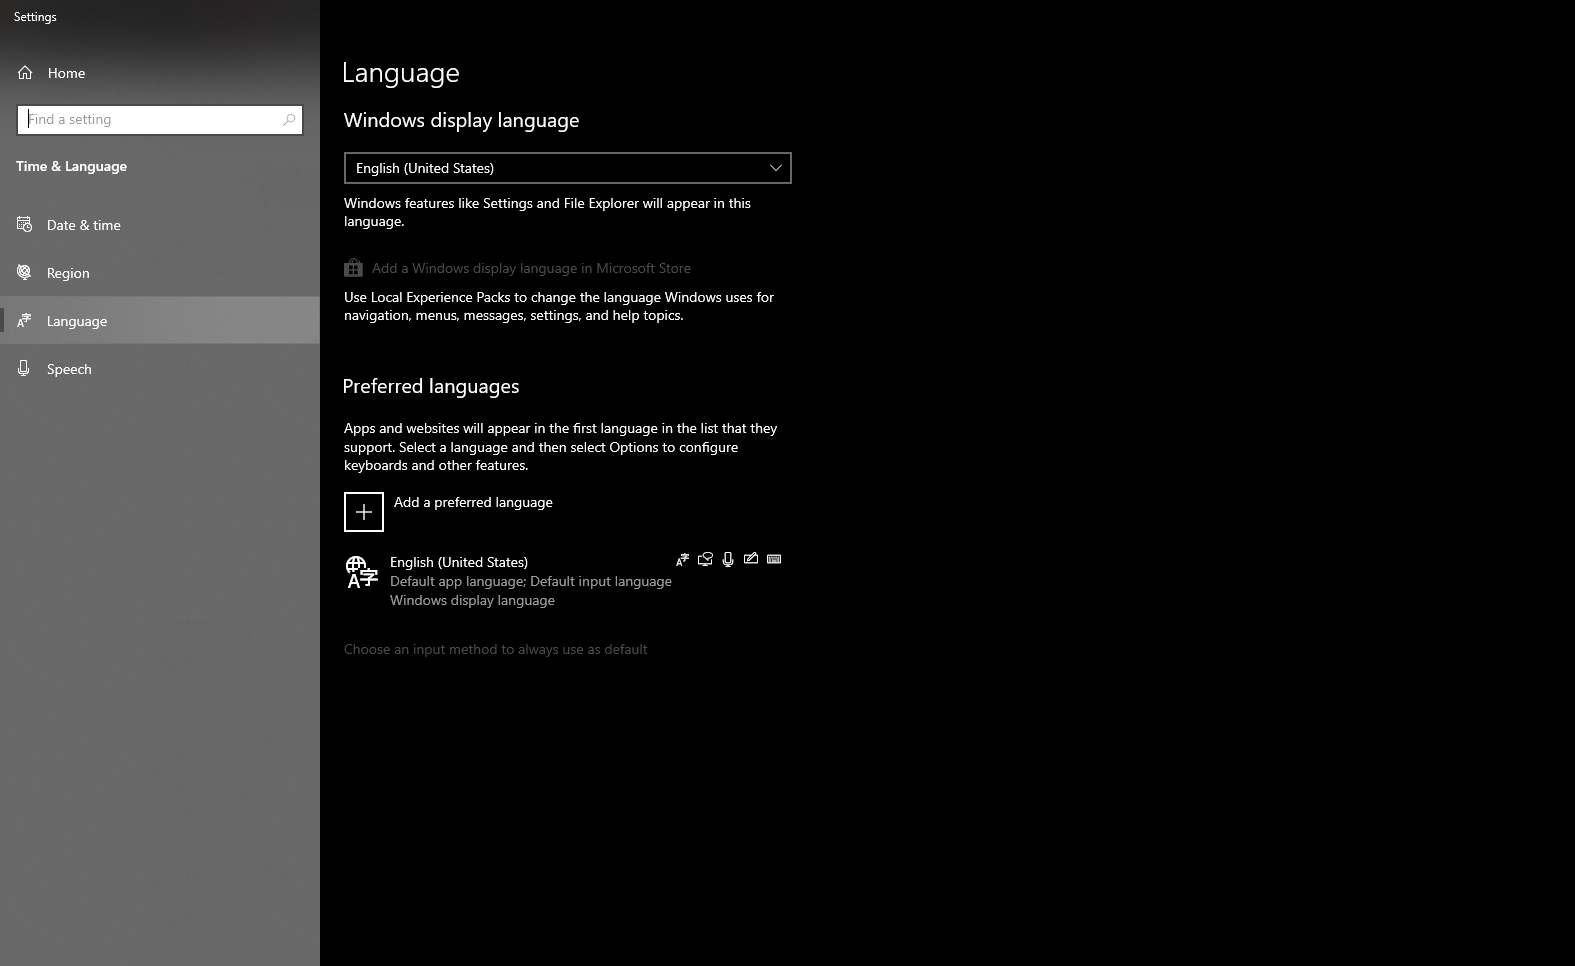 Windows 10 keeps acting like i've installed French keyboard input cb19f3a2-1297-402e-8c03-d9e0a8a983e6?upload=true.png